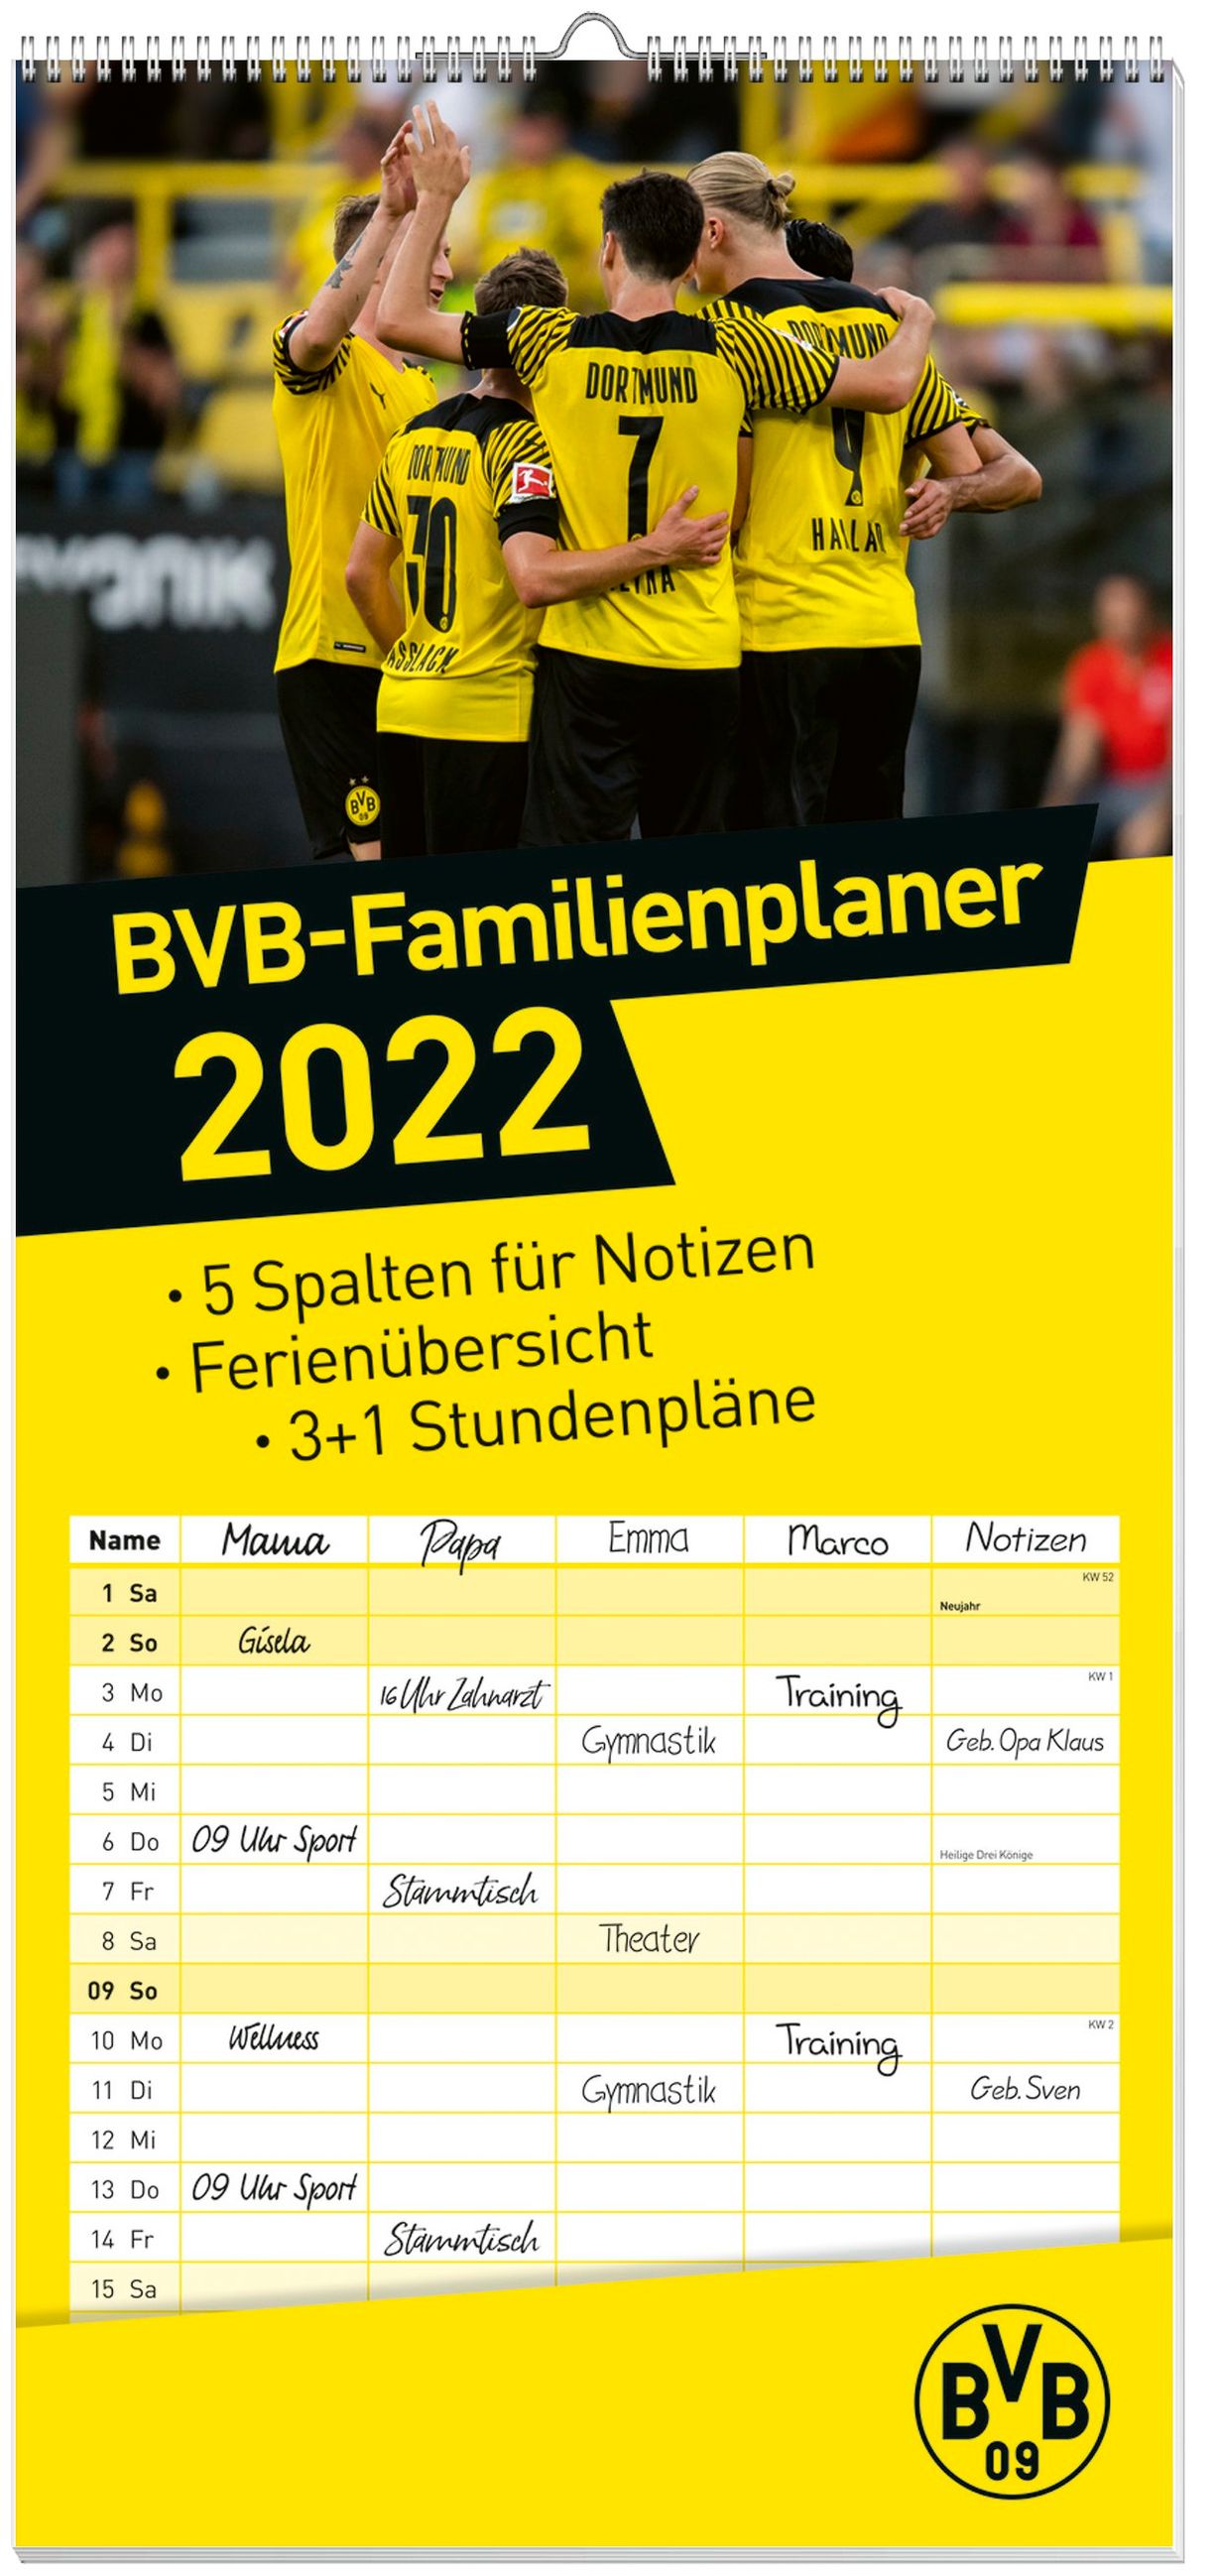 BVB Familienplaner 2022 - Kalender bei Weltbild.at bestellen